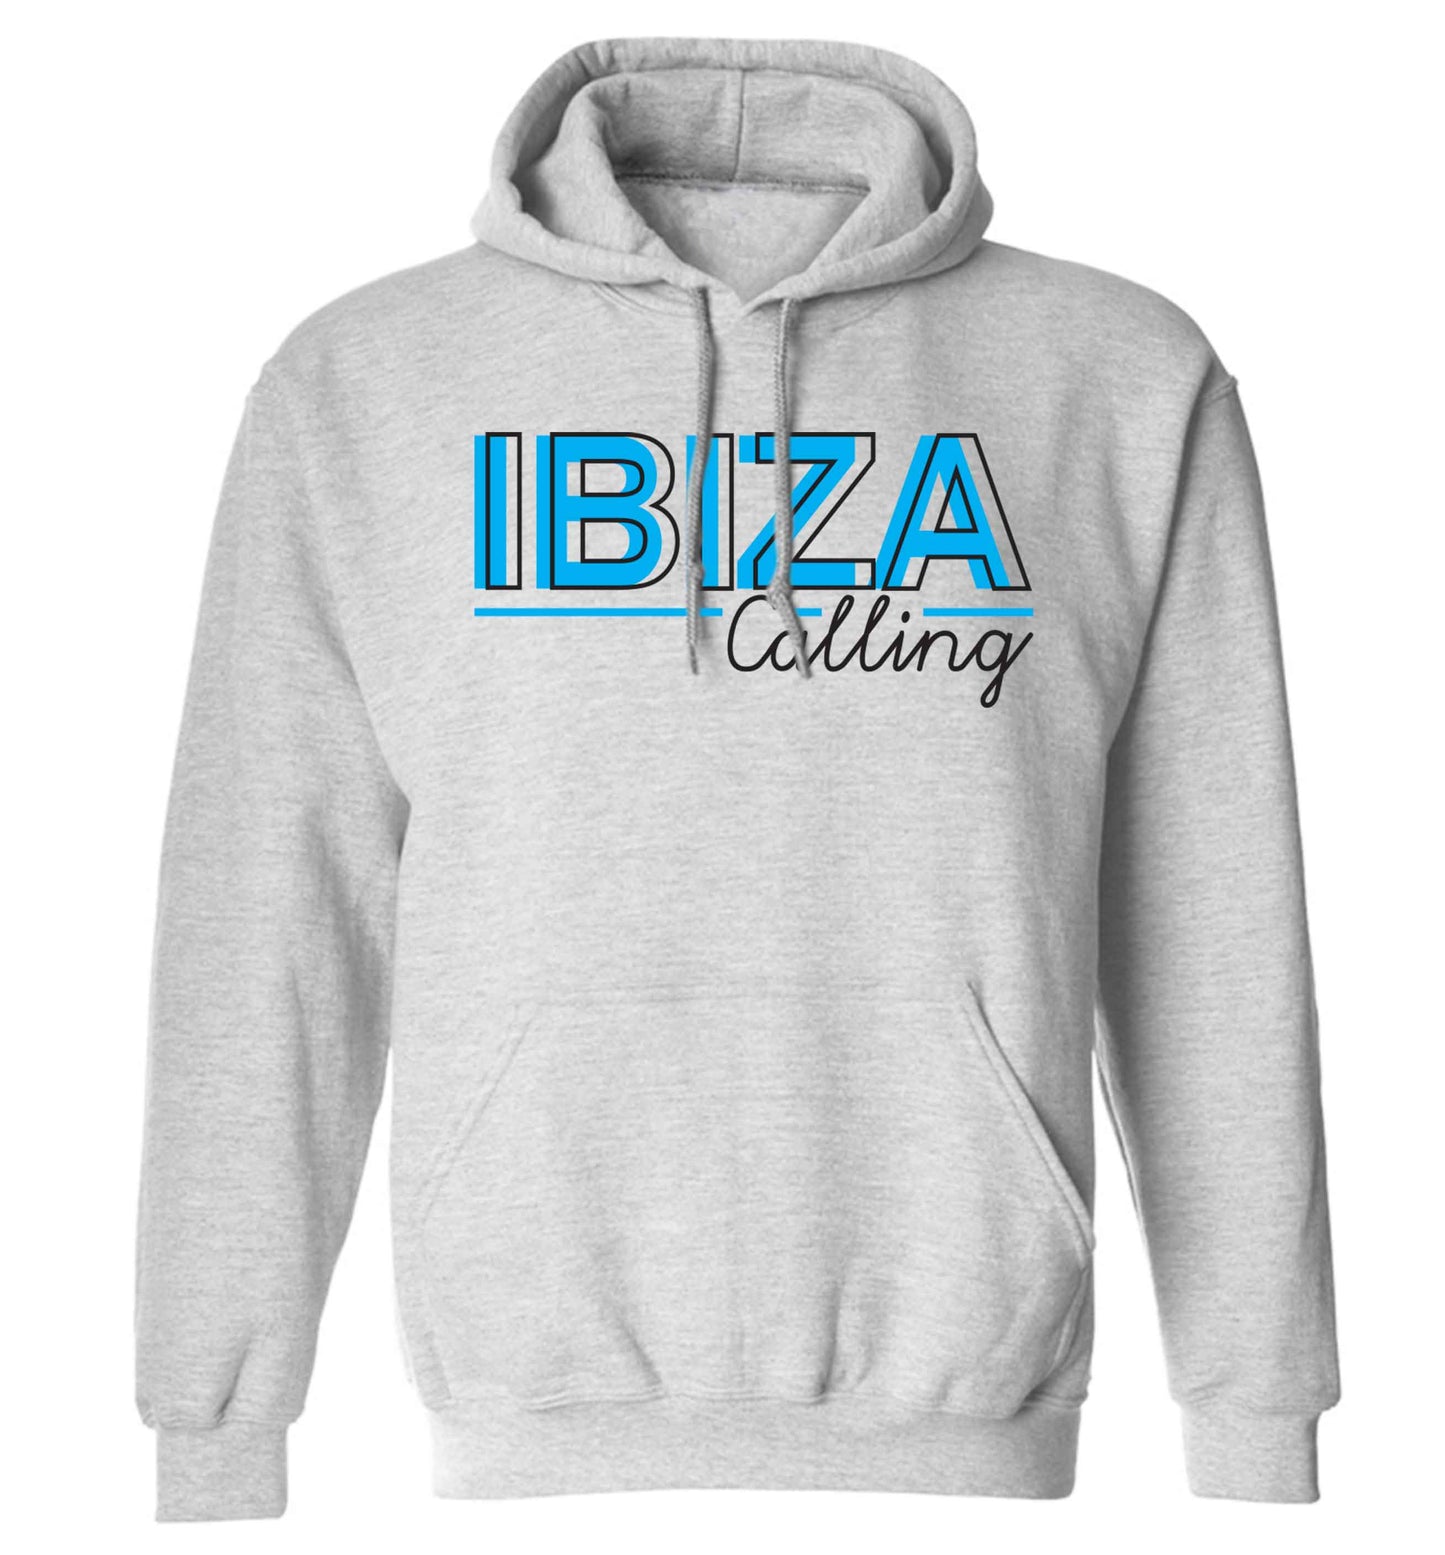 Ibiza calling adults unisex grey hoodie 2XL